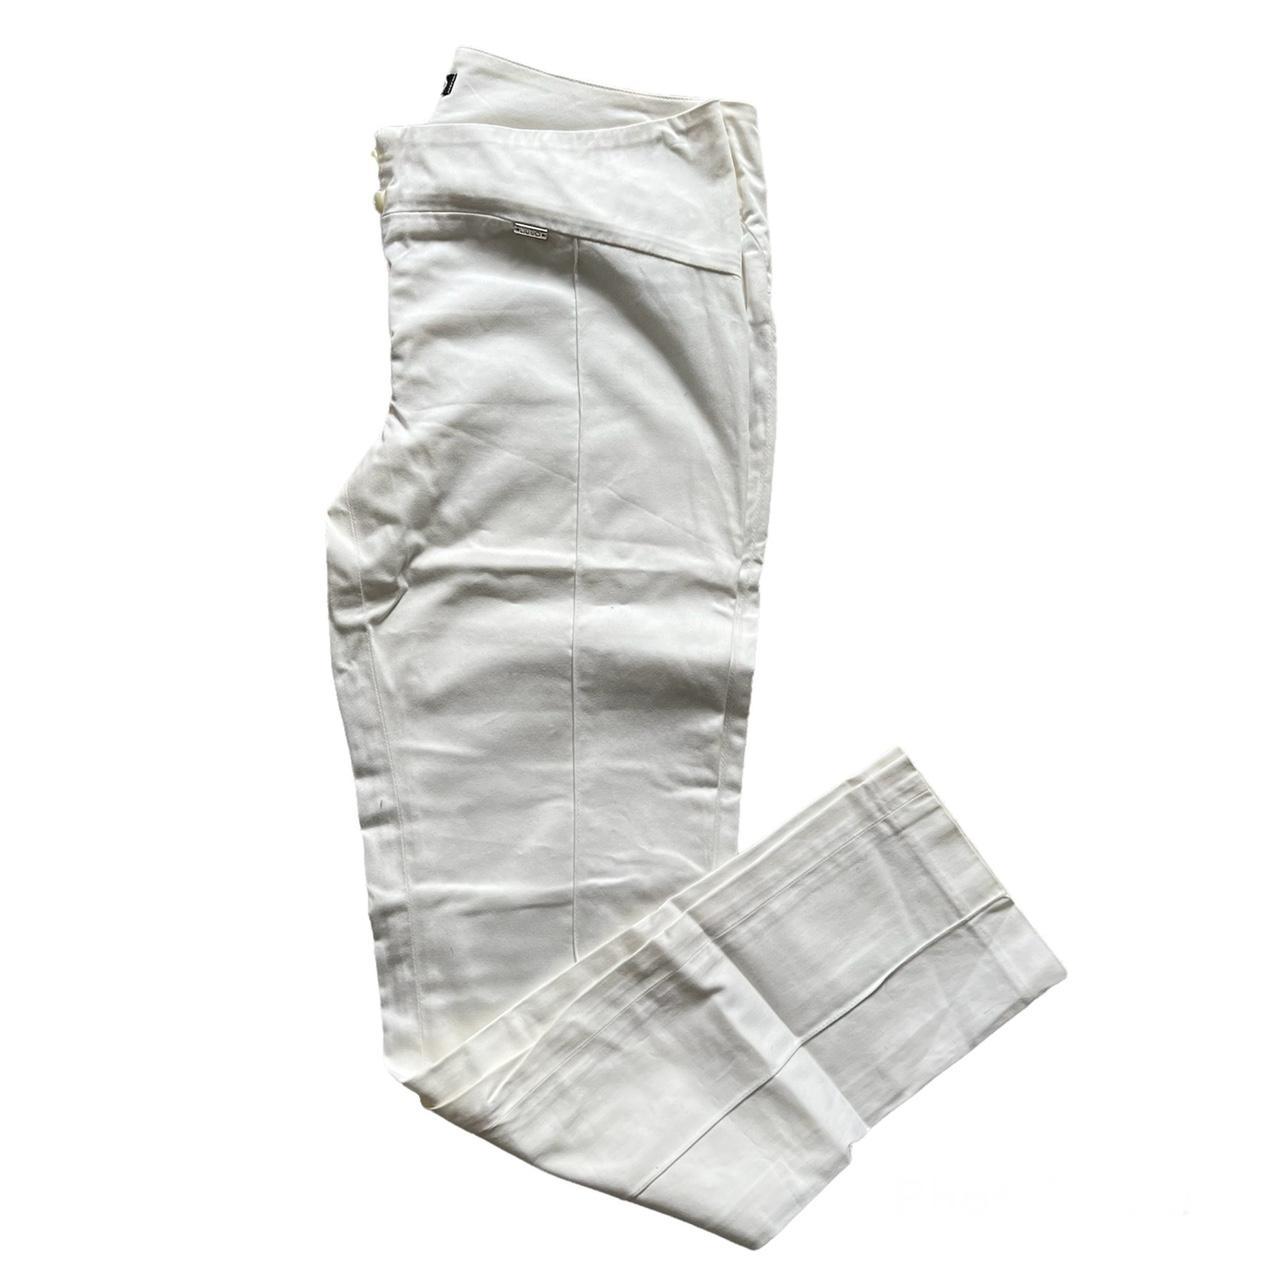 Liu Jo Women's White Trousers